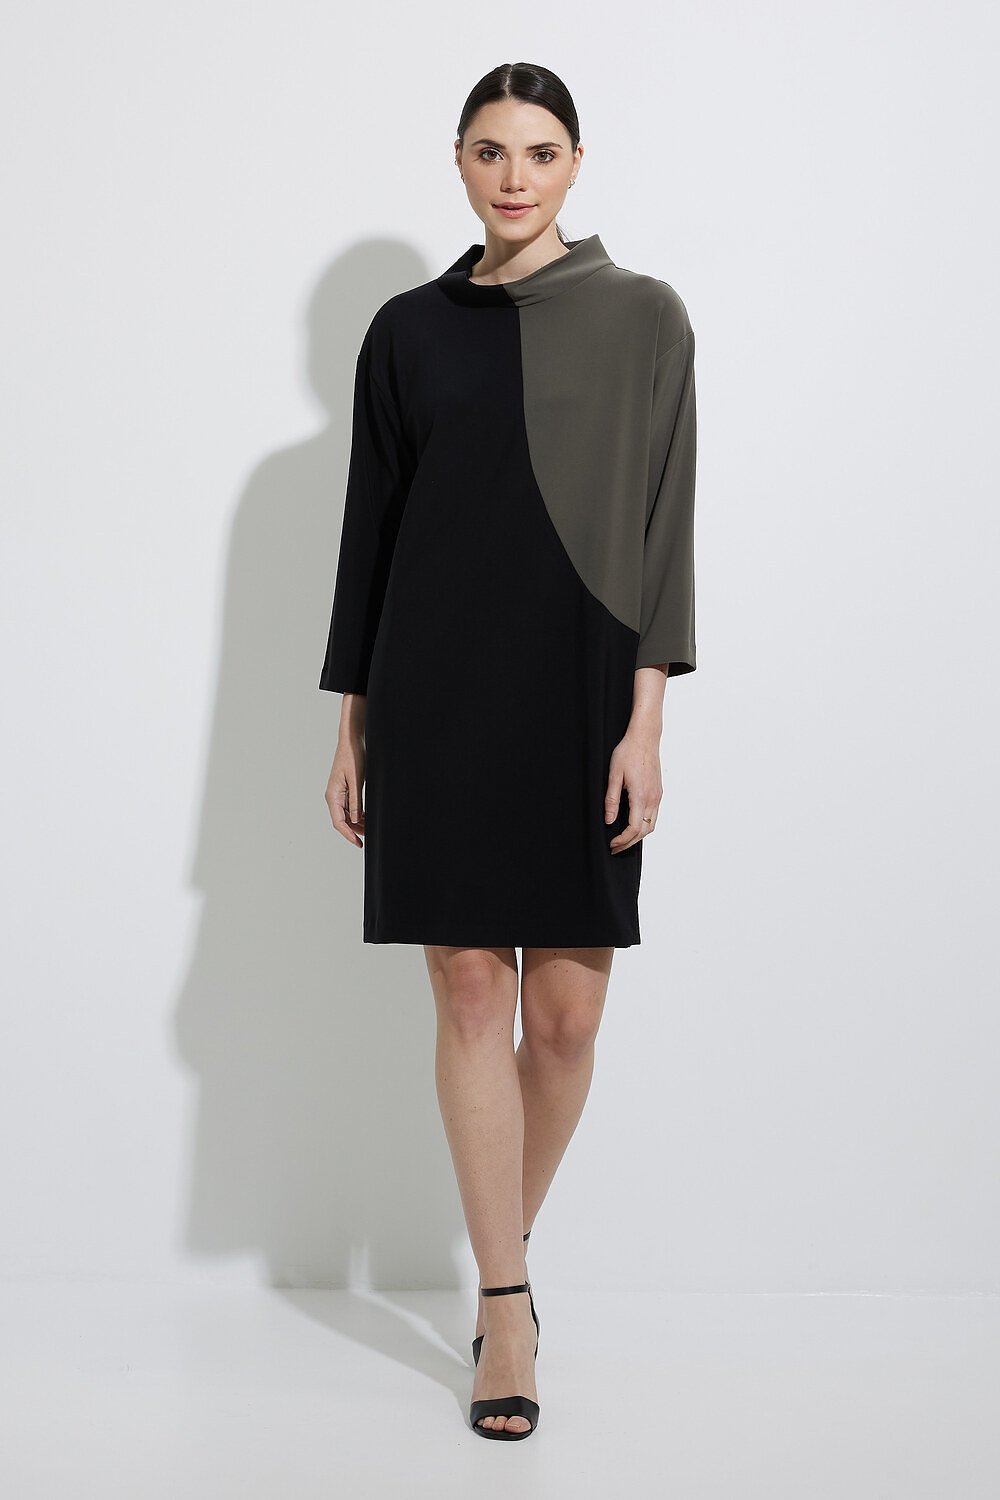 Joseph Ribkoff Colour-Blocked Dress Style 223289. Black/avocado